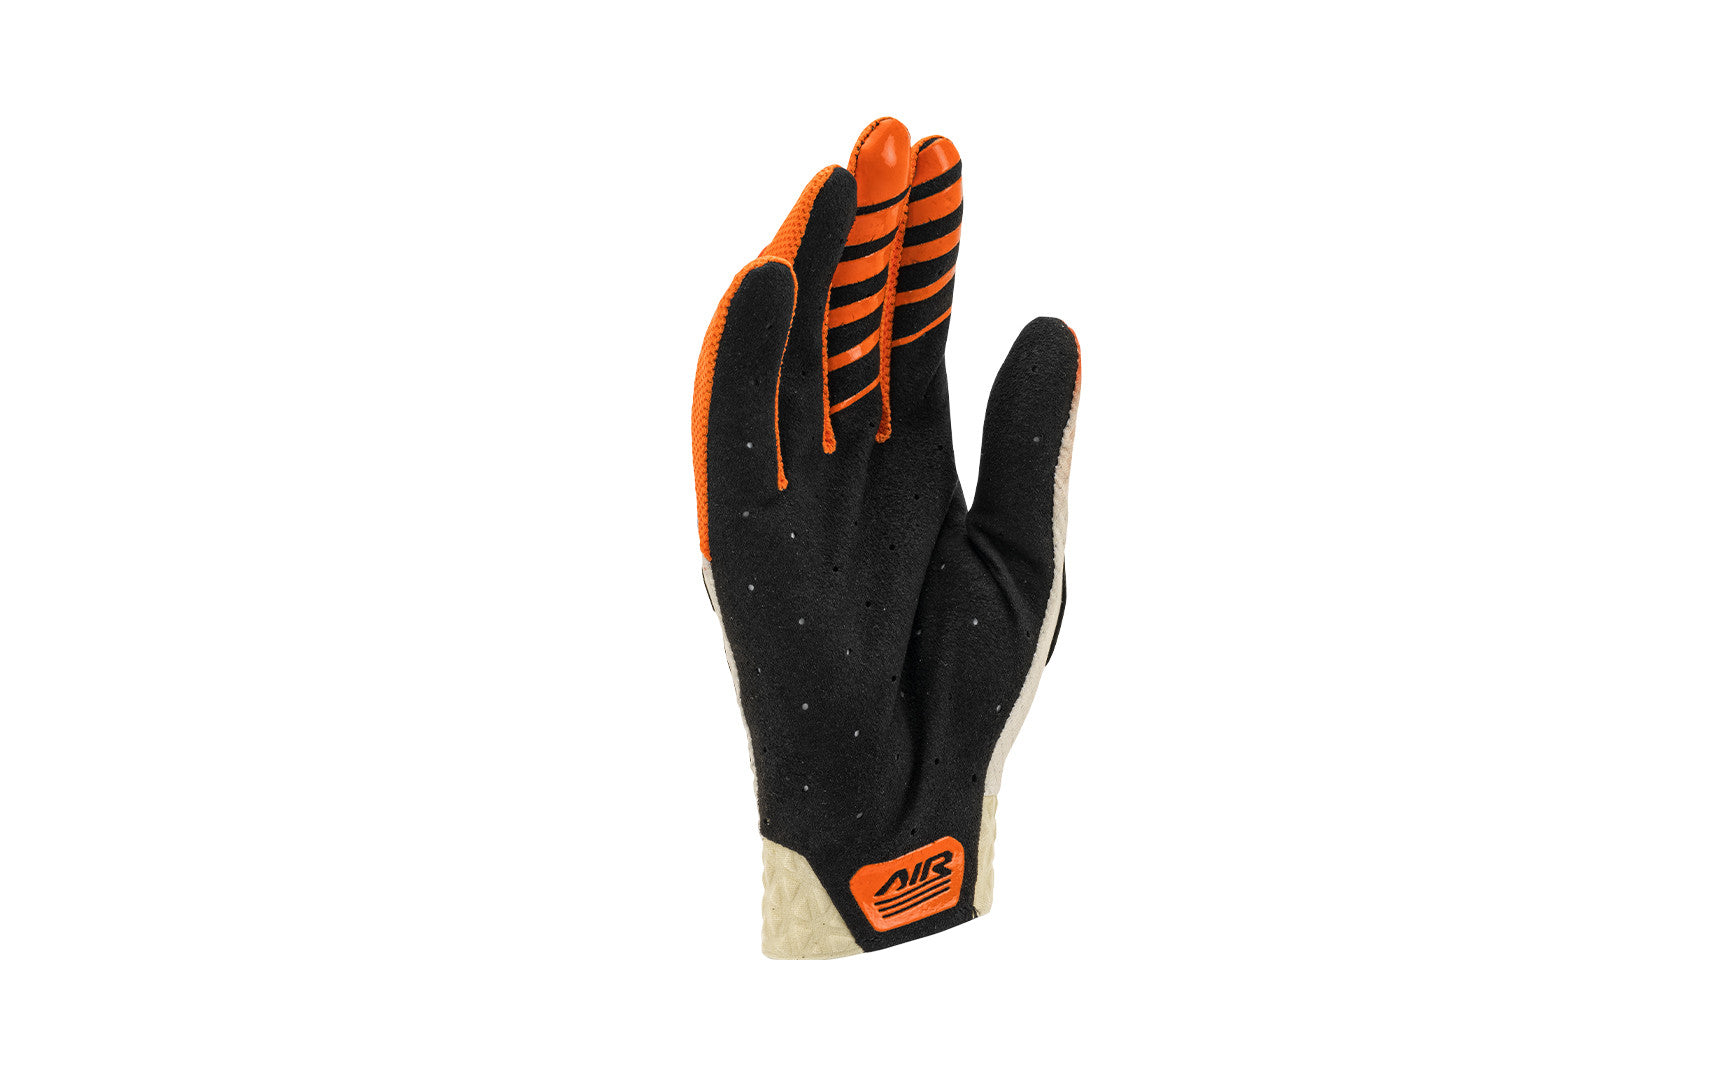 MONDRAKER-Troy Lee® Design Air Gloves Desert - Premium Bikeshop